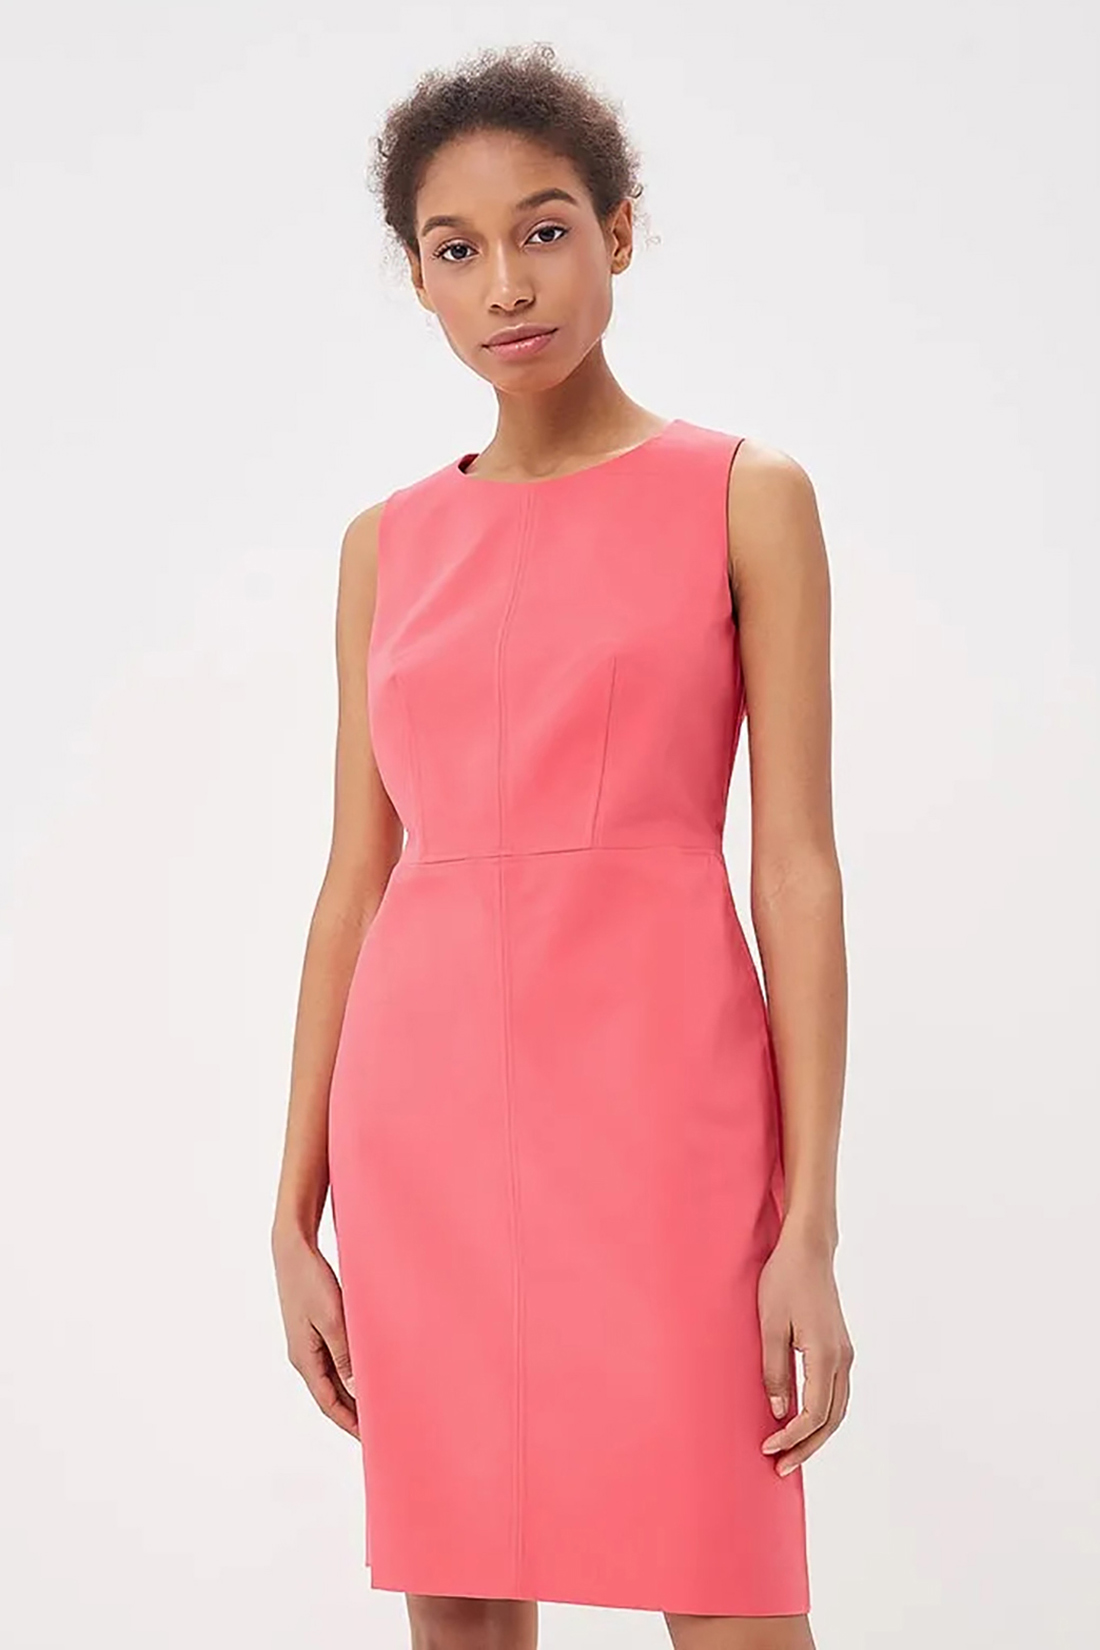 Платье-футляр (арт. baon B458044), размер L, цвет розовый Платье-футляр (арт. baon B458044) - фото 3